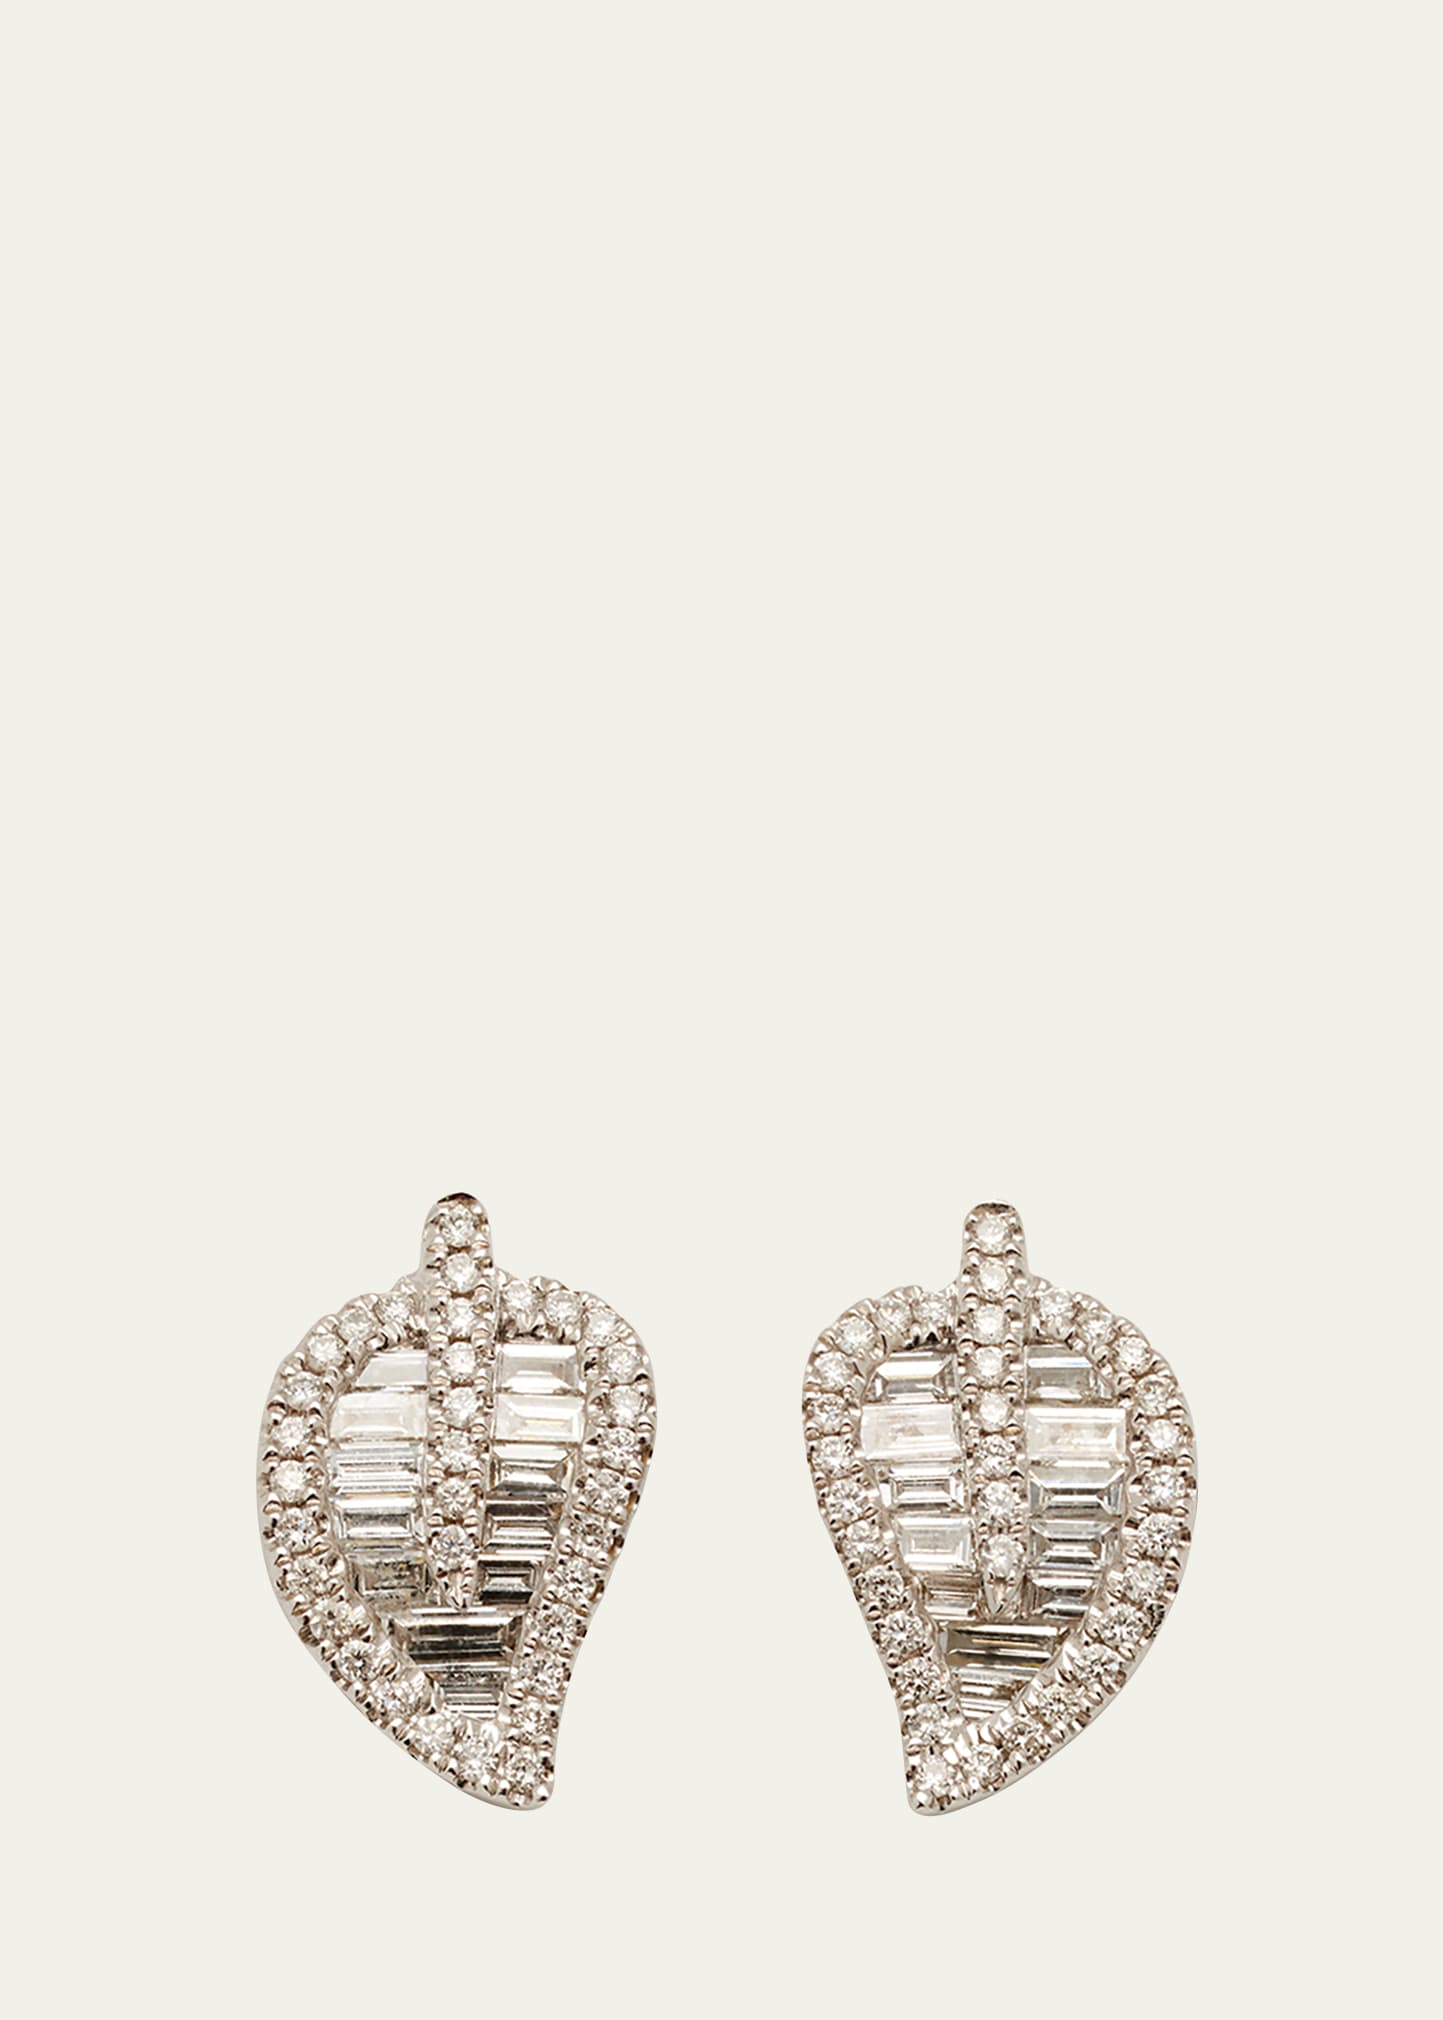 Small Diamond Leaf Stud Earrings in 18k White Gold